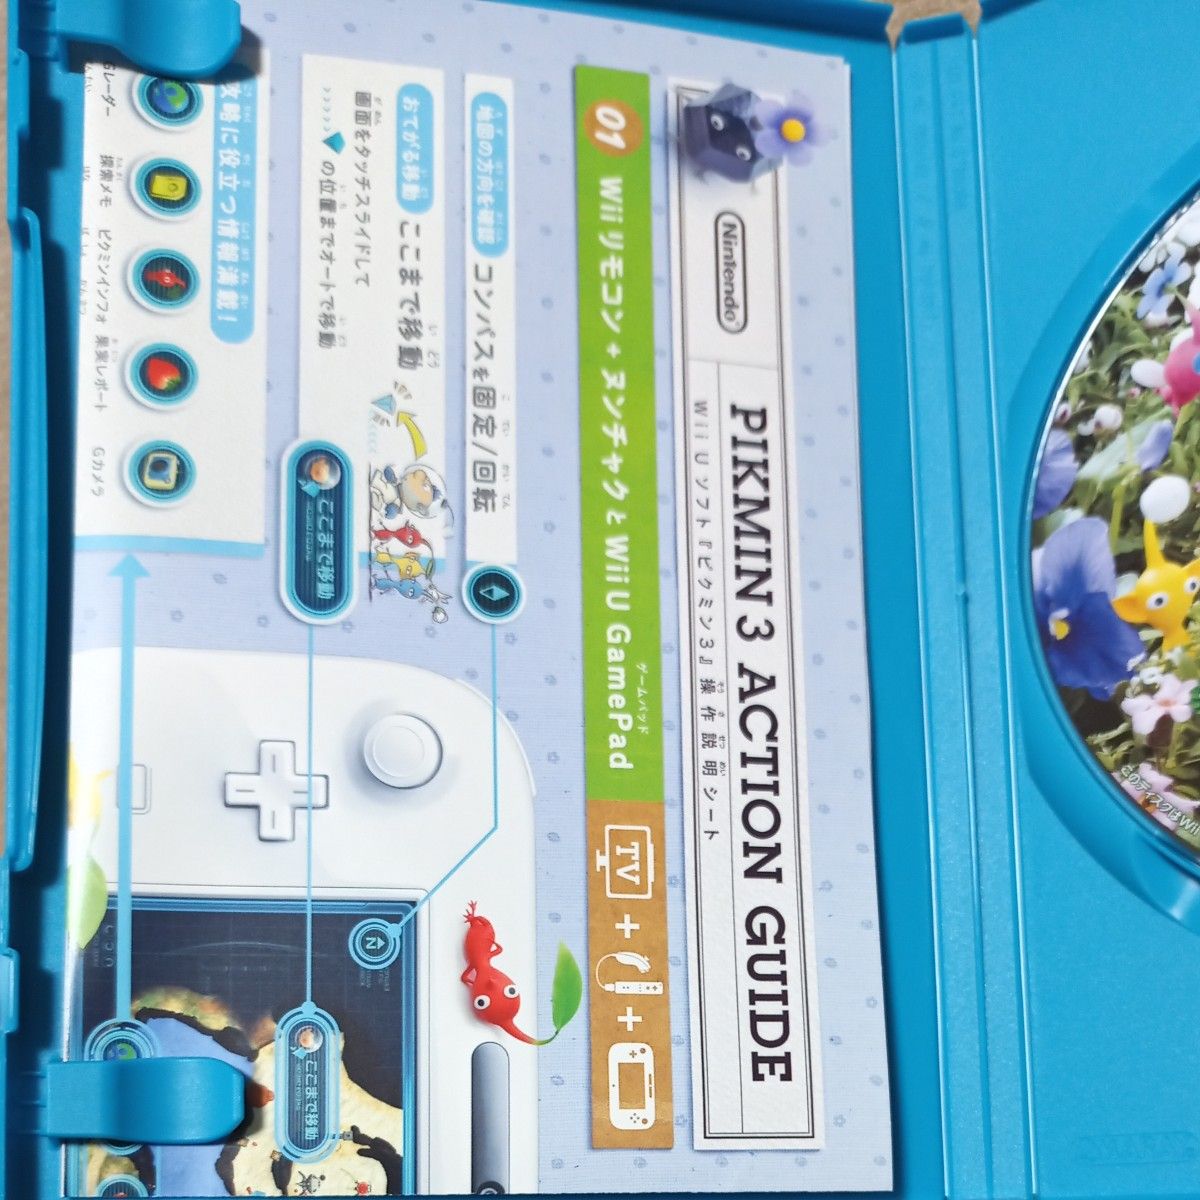 【Wii U】 ピクミン3